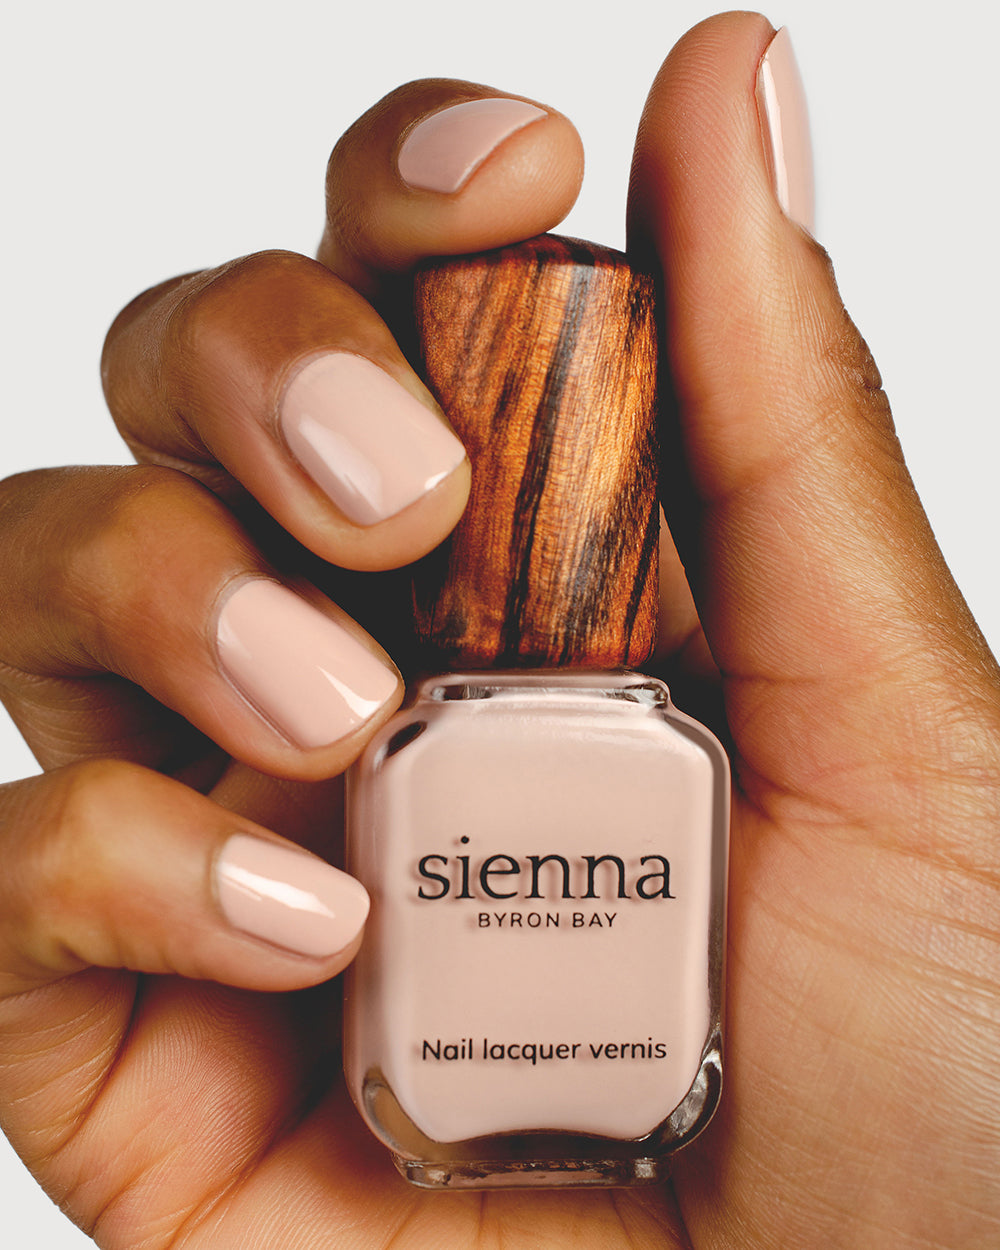 Soft neutral-pink nail polish hand swatch on medium skin tone holding sienna bottle close-up